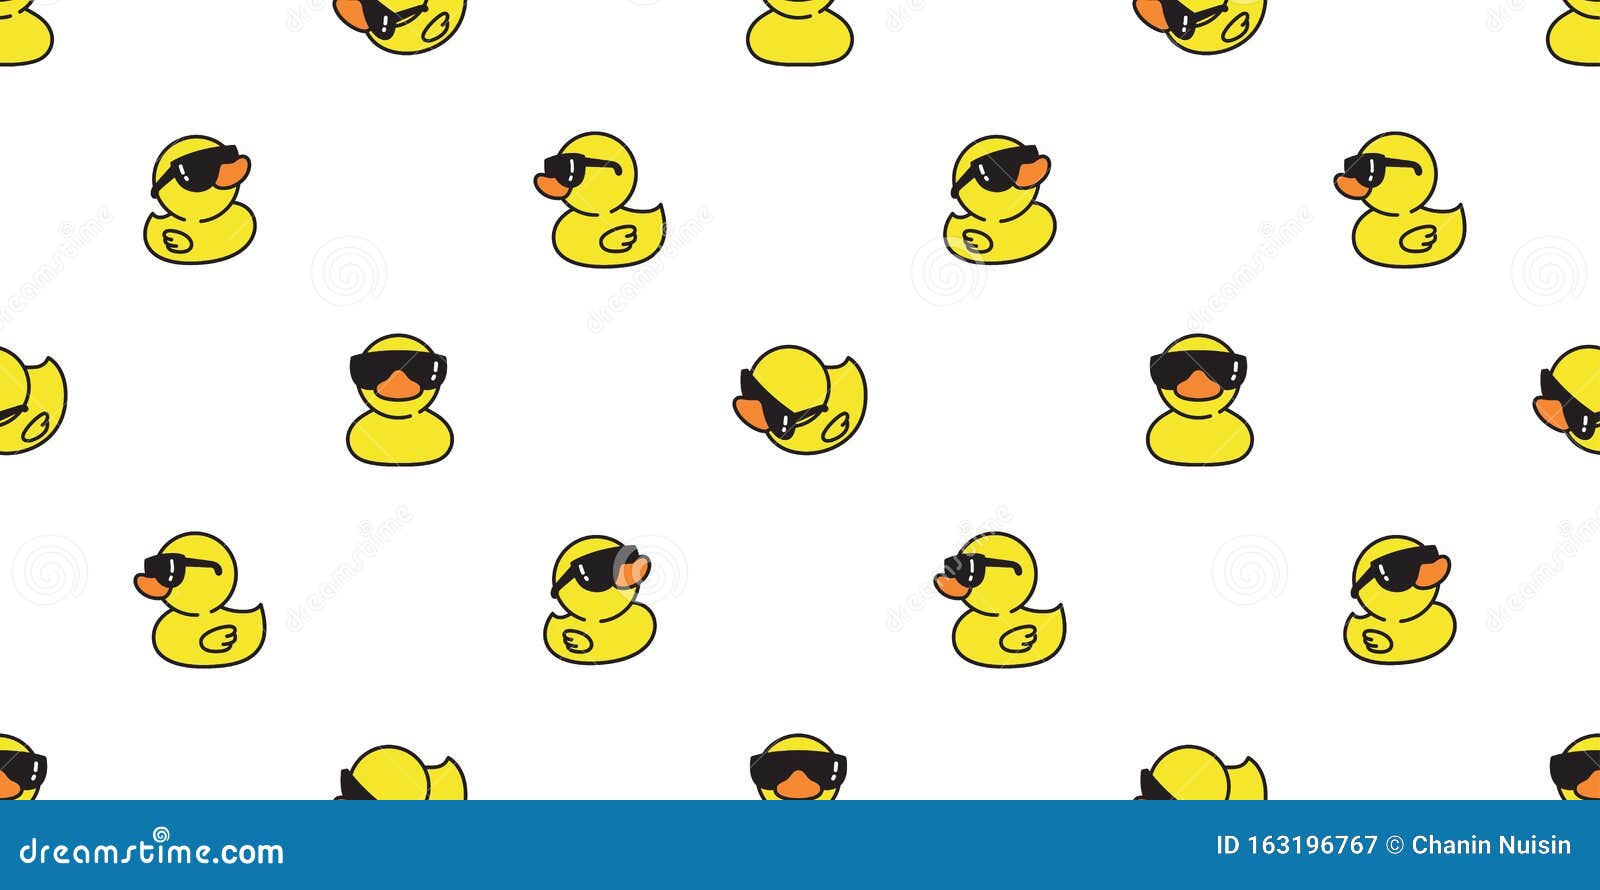 Duck Vector Icon Logo Rubber Duck Sunglasses Shower Bath Cartoon Scarf  Isolated Repeat Wallpaper Tile Background Illustration Bird Stock Vector -  Illustration of bathroom, duck: 163196767